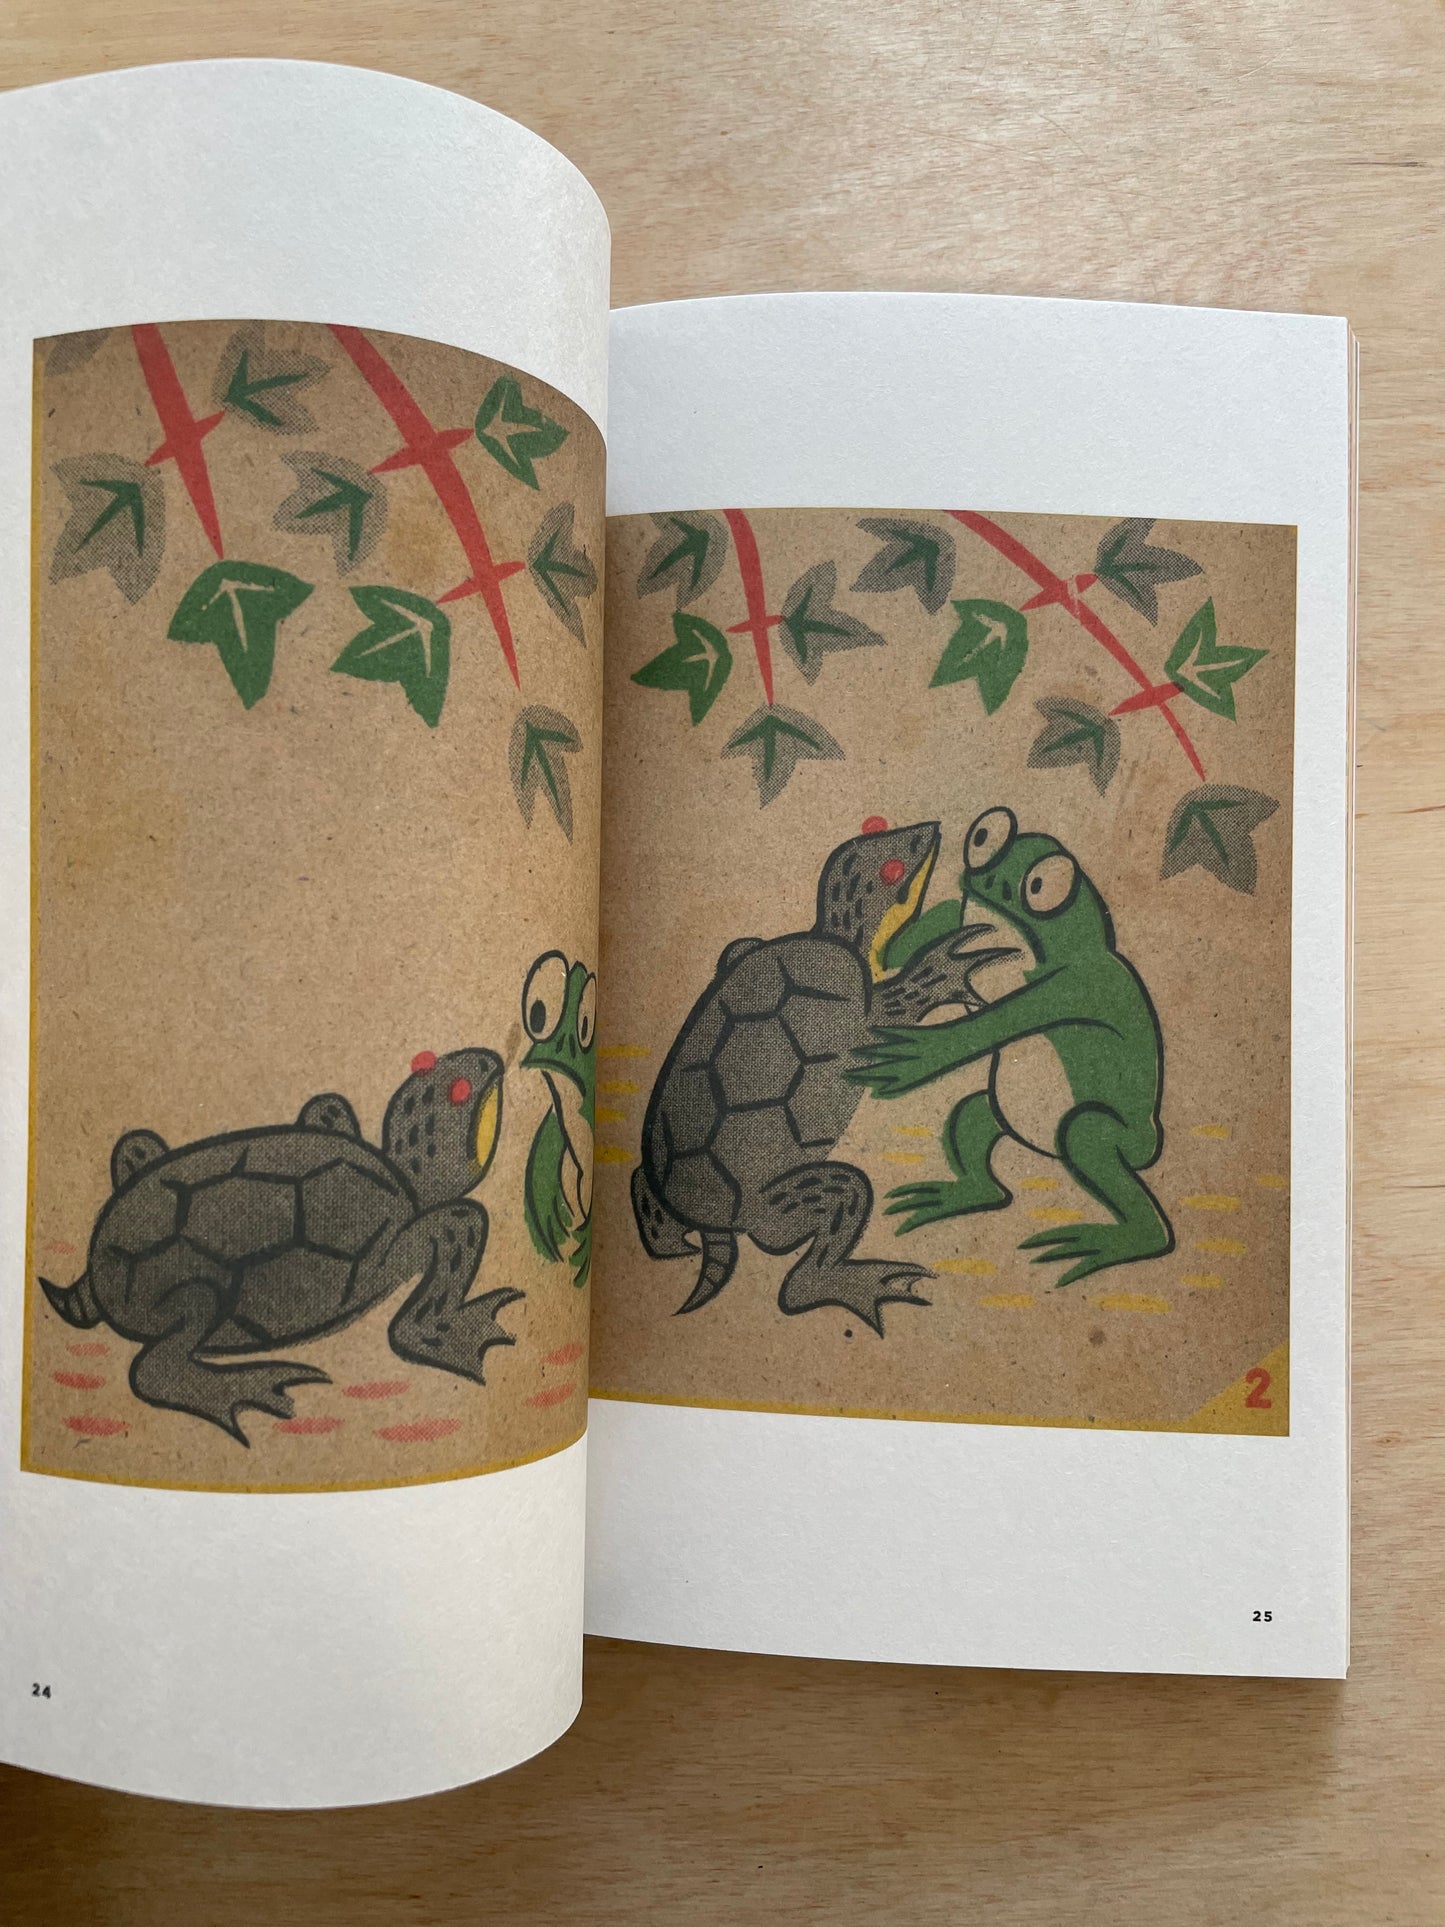 Anthropomorphic Japan: Frogs